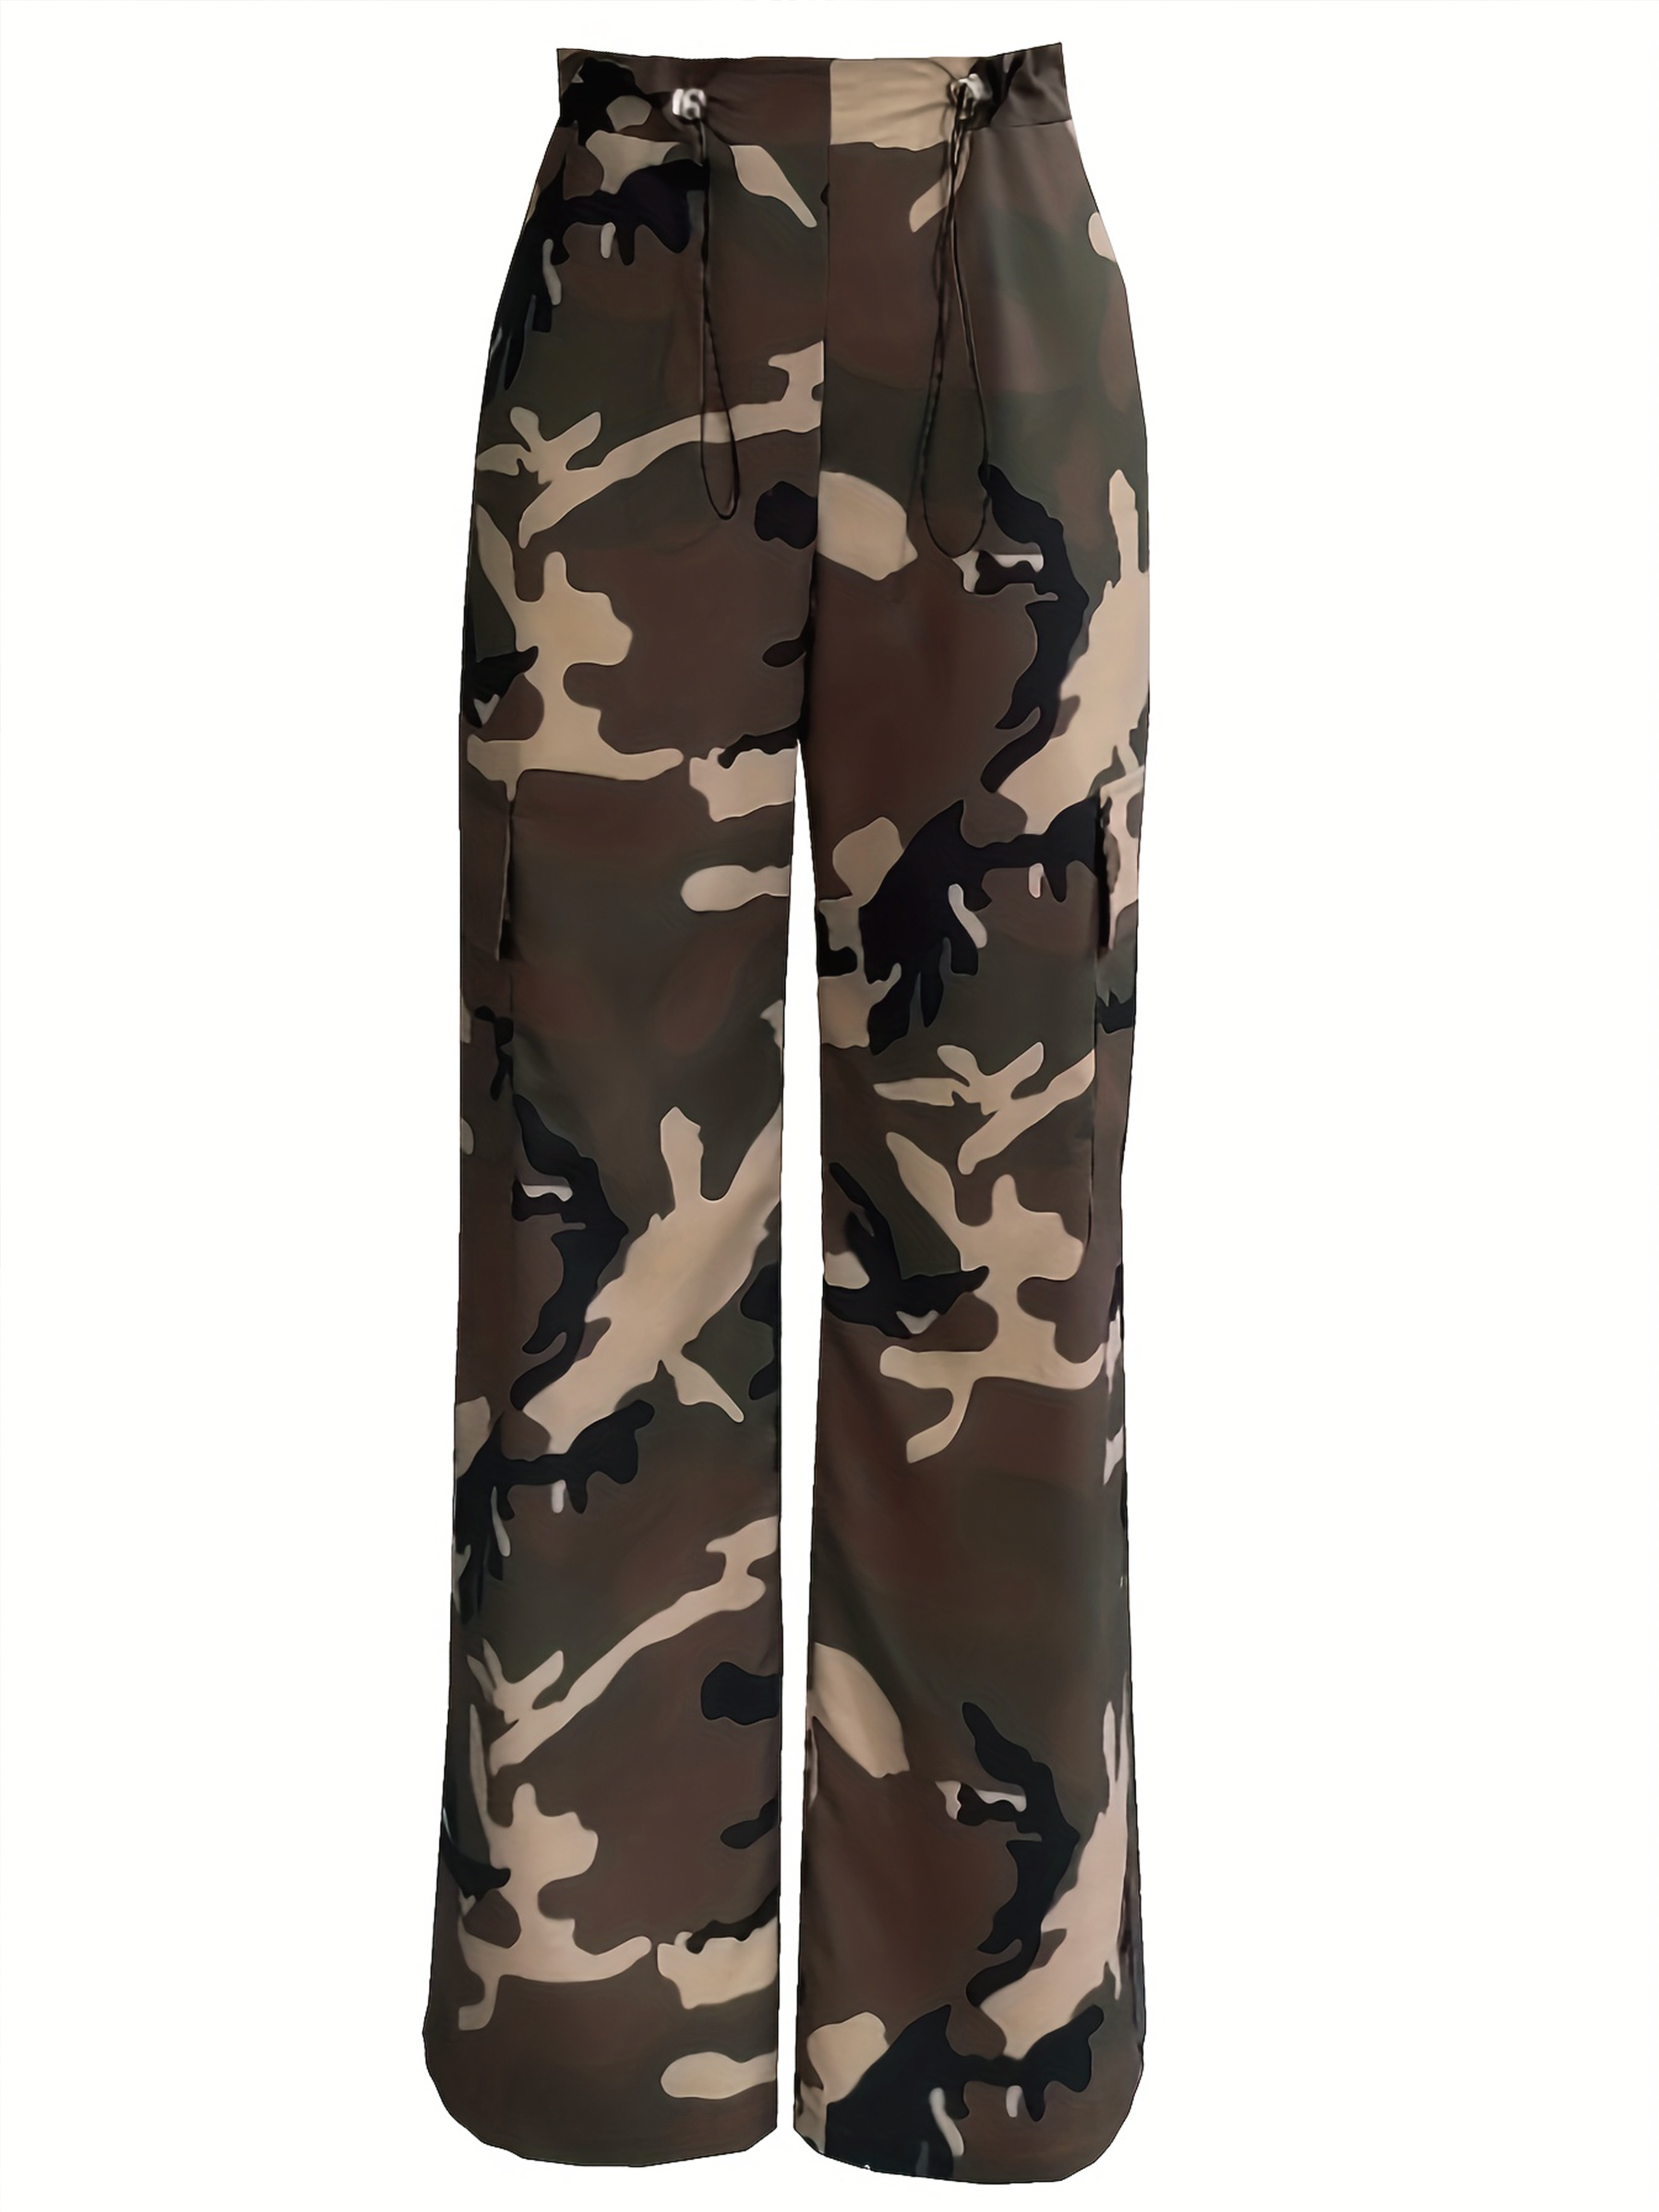 Zara Camouflage Cargo Pants  Pants for women, Camouflage cargo pants, Fall  trends